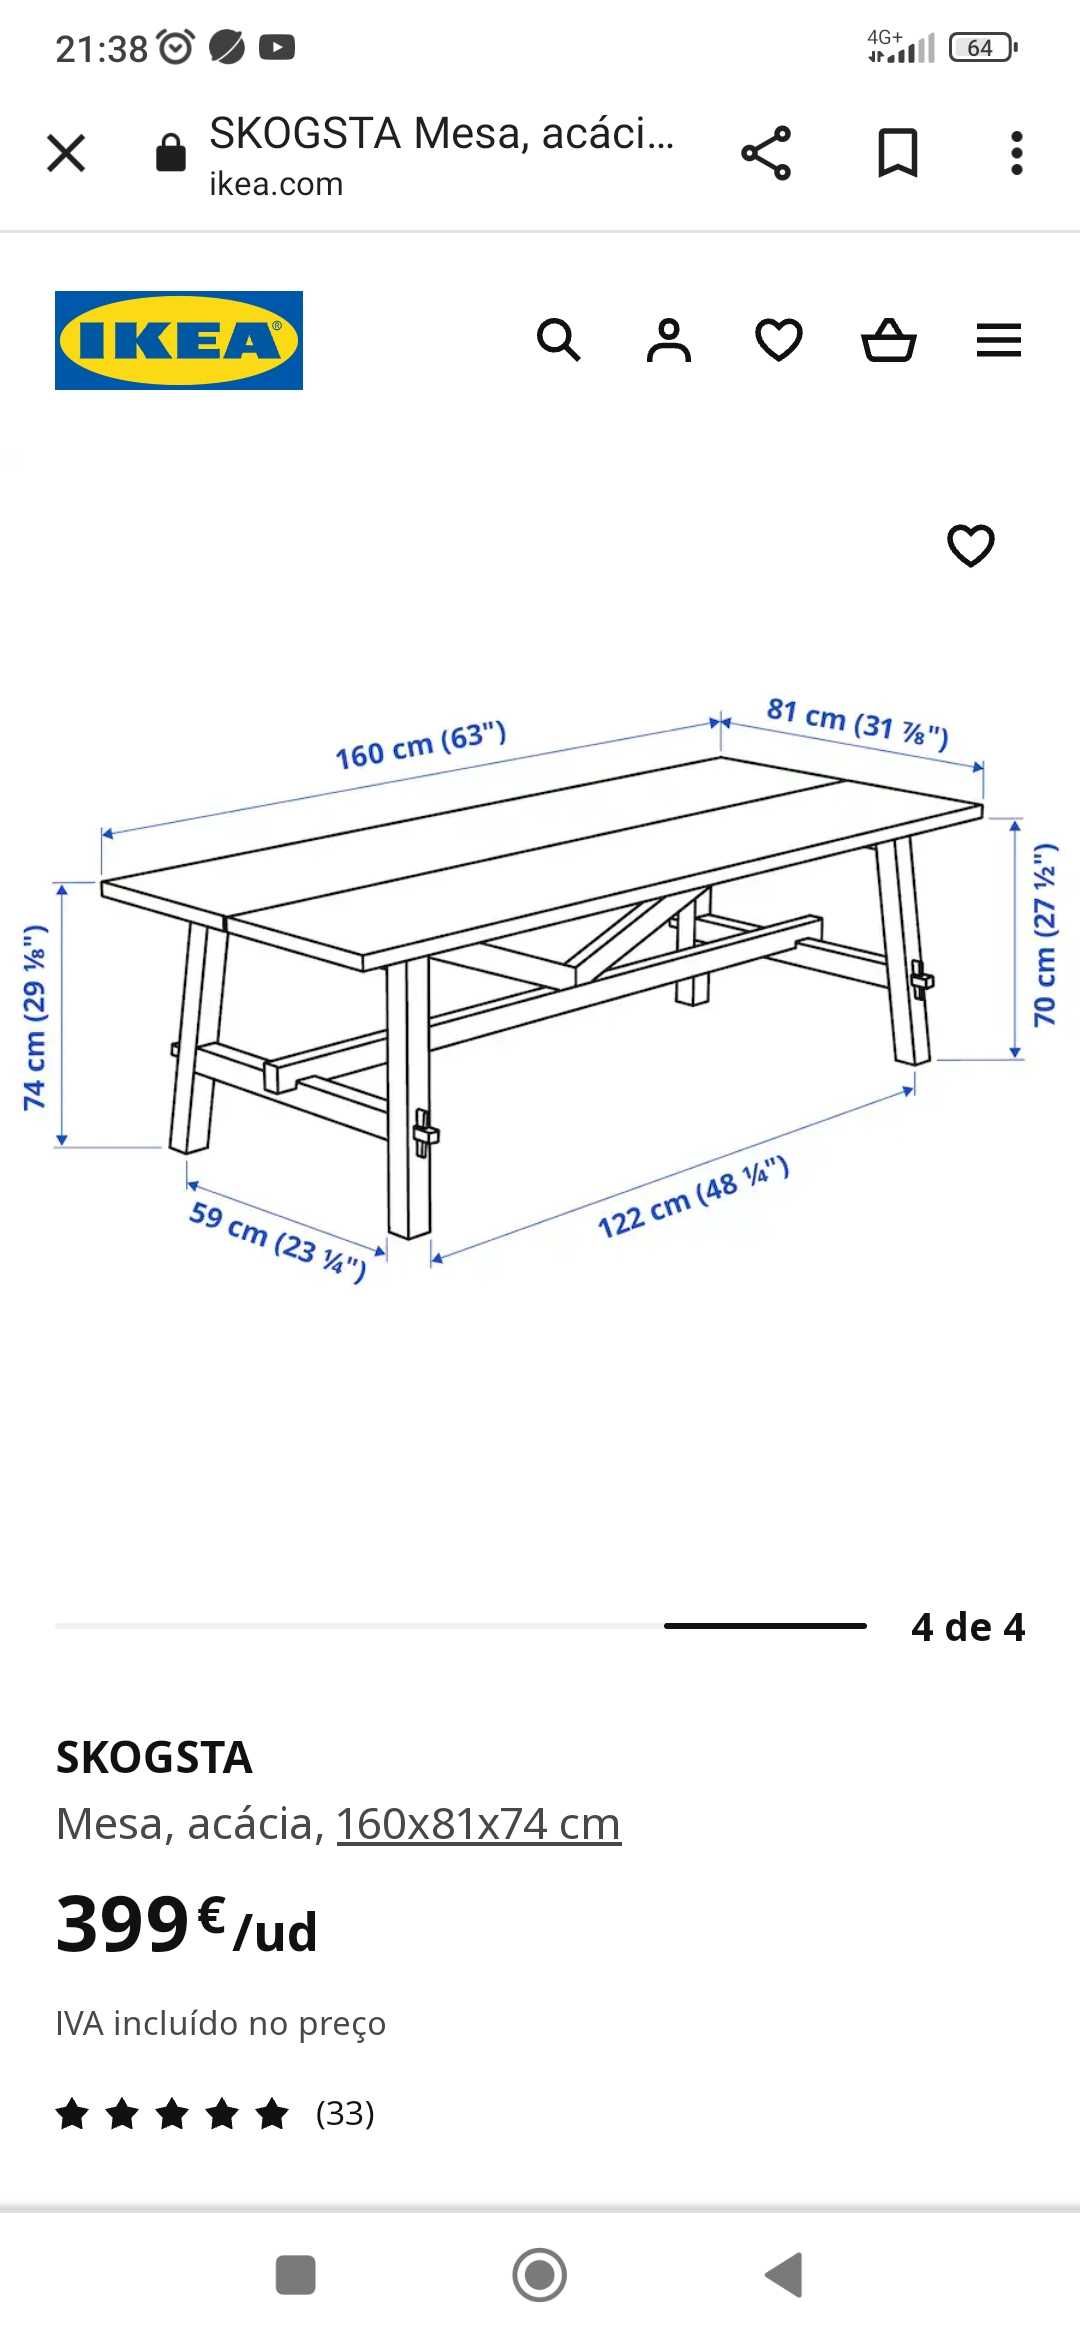 Mesa do IKEA modelo skogsta